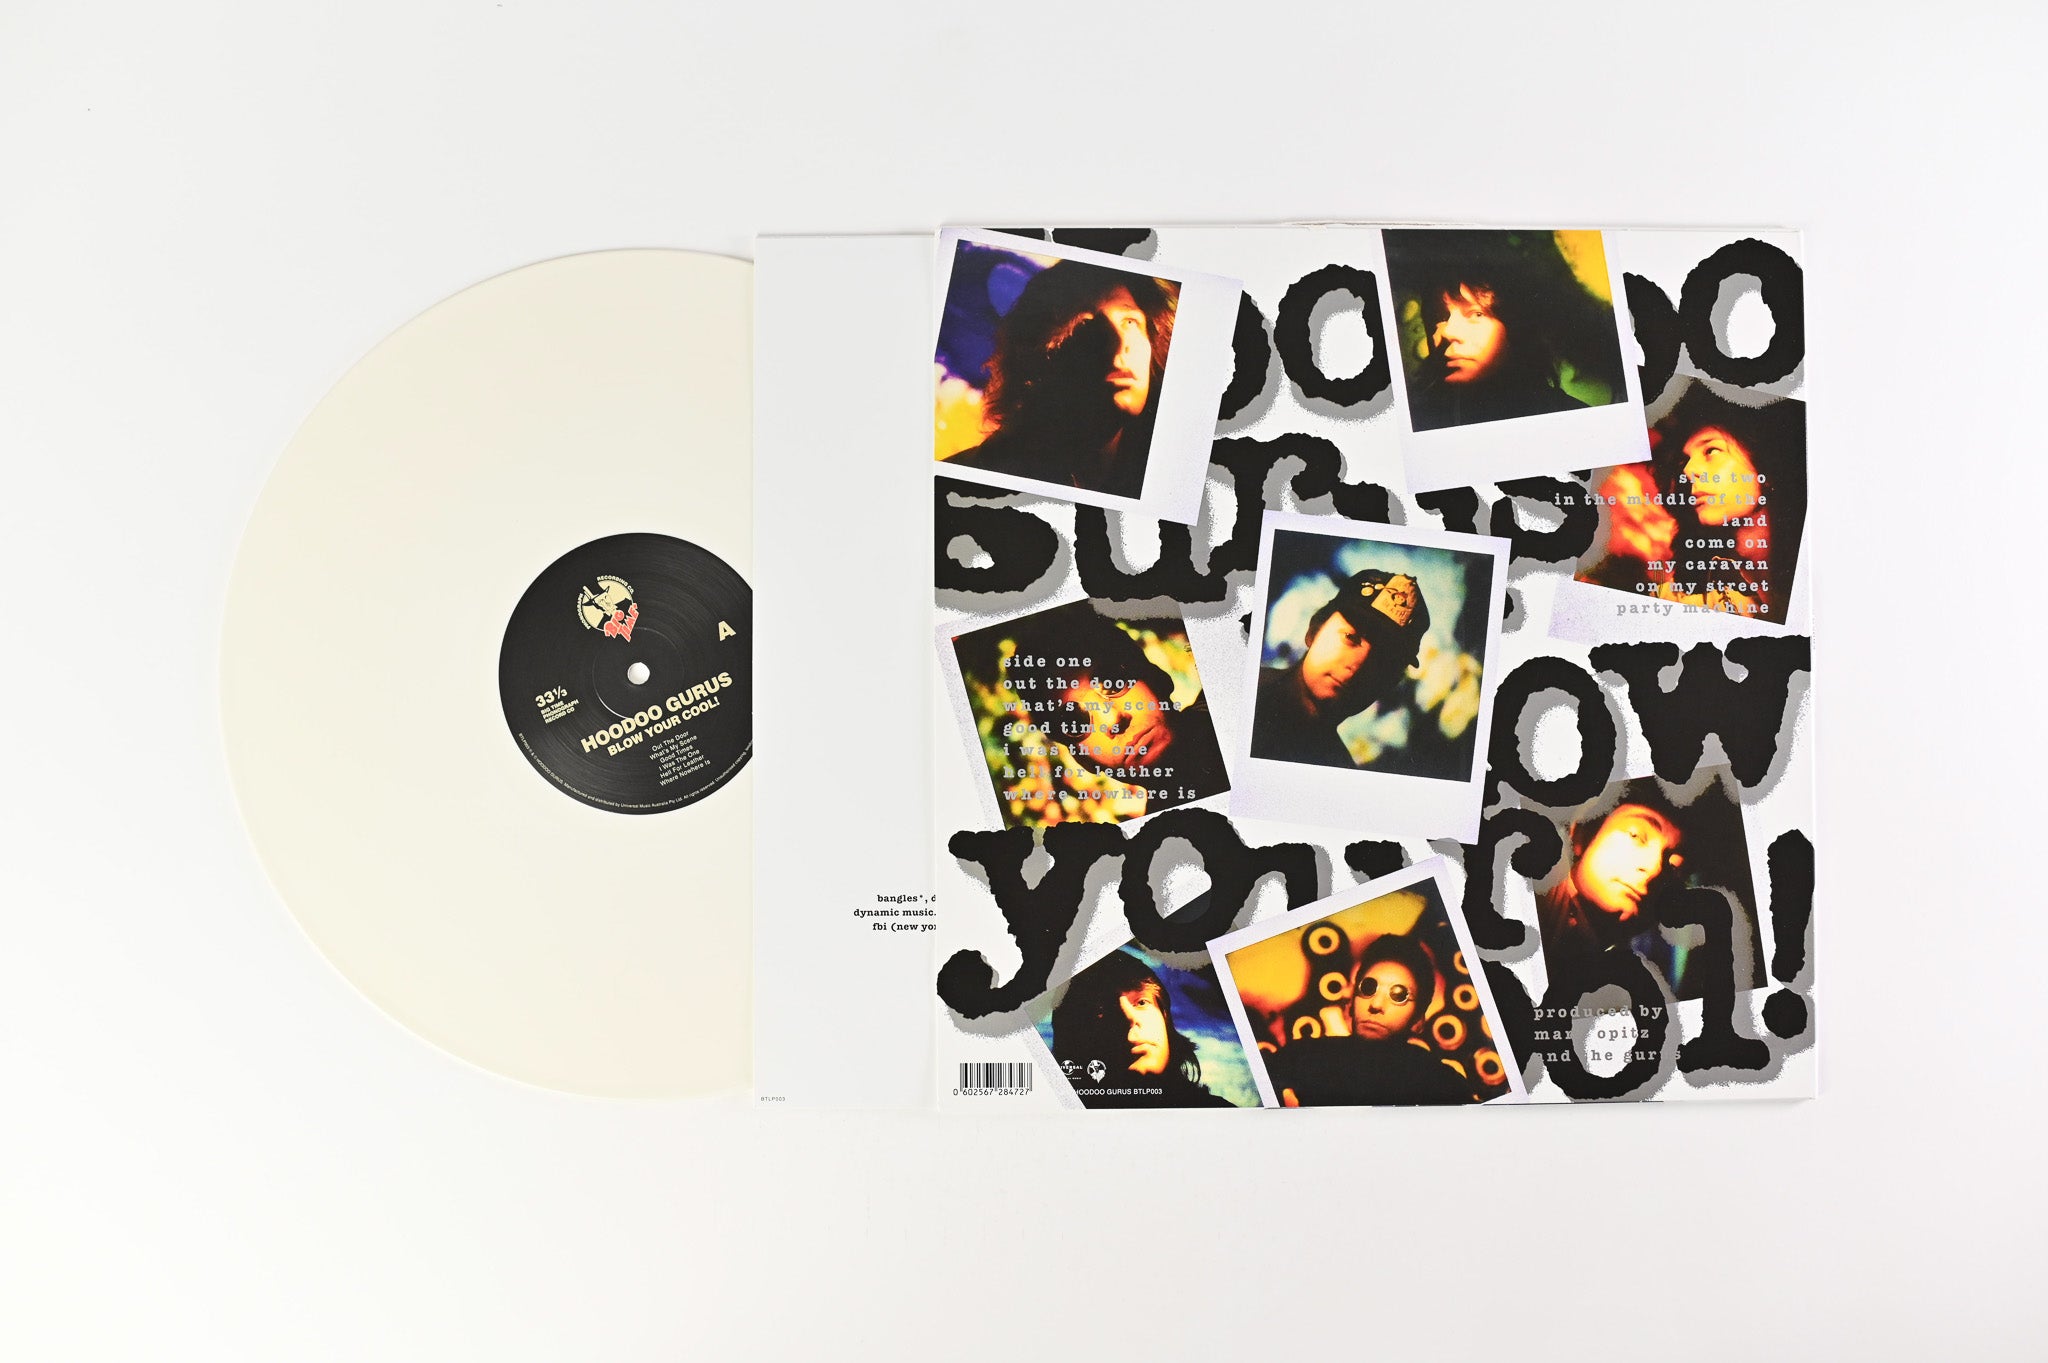 Hoodoo Gurus - Blow Your Cool! on Big Time White Vinyl Reissue